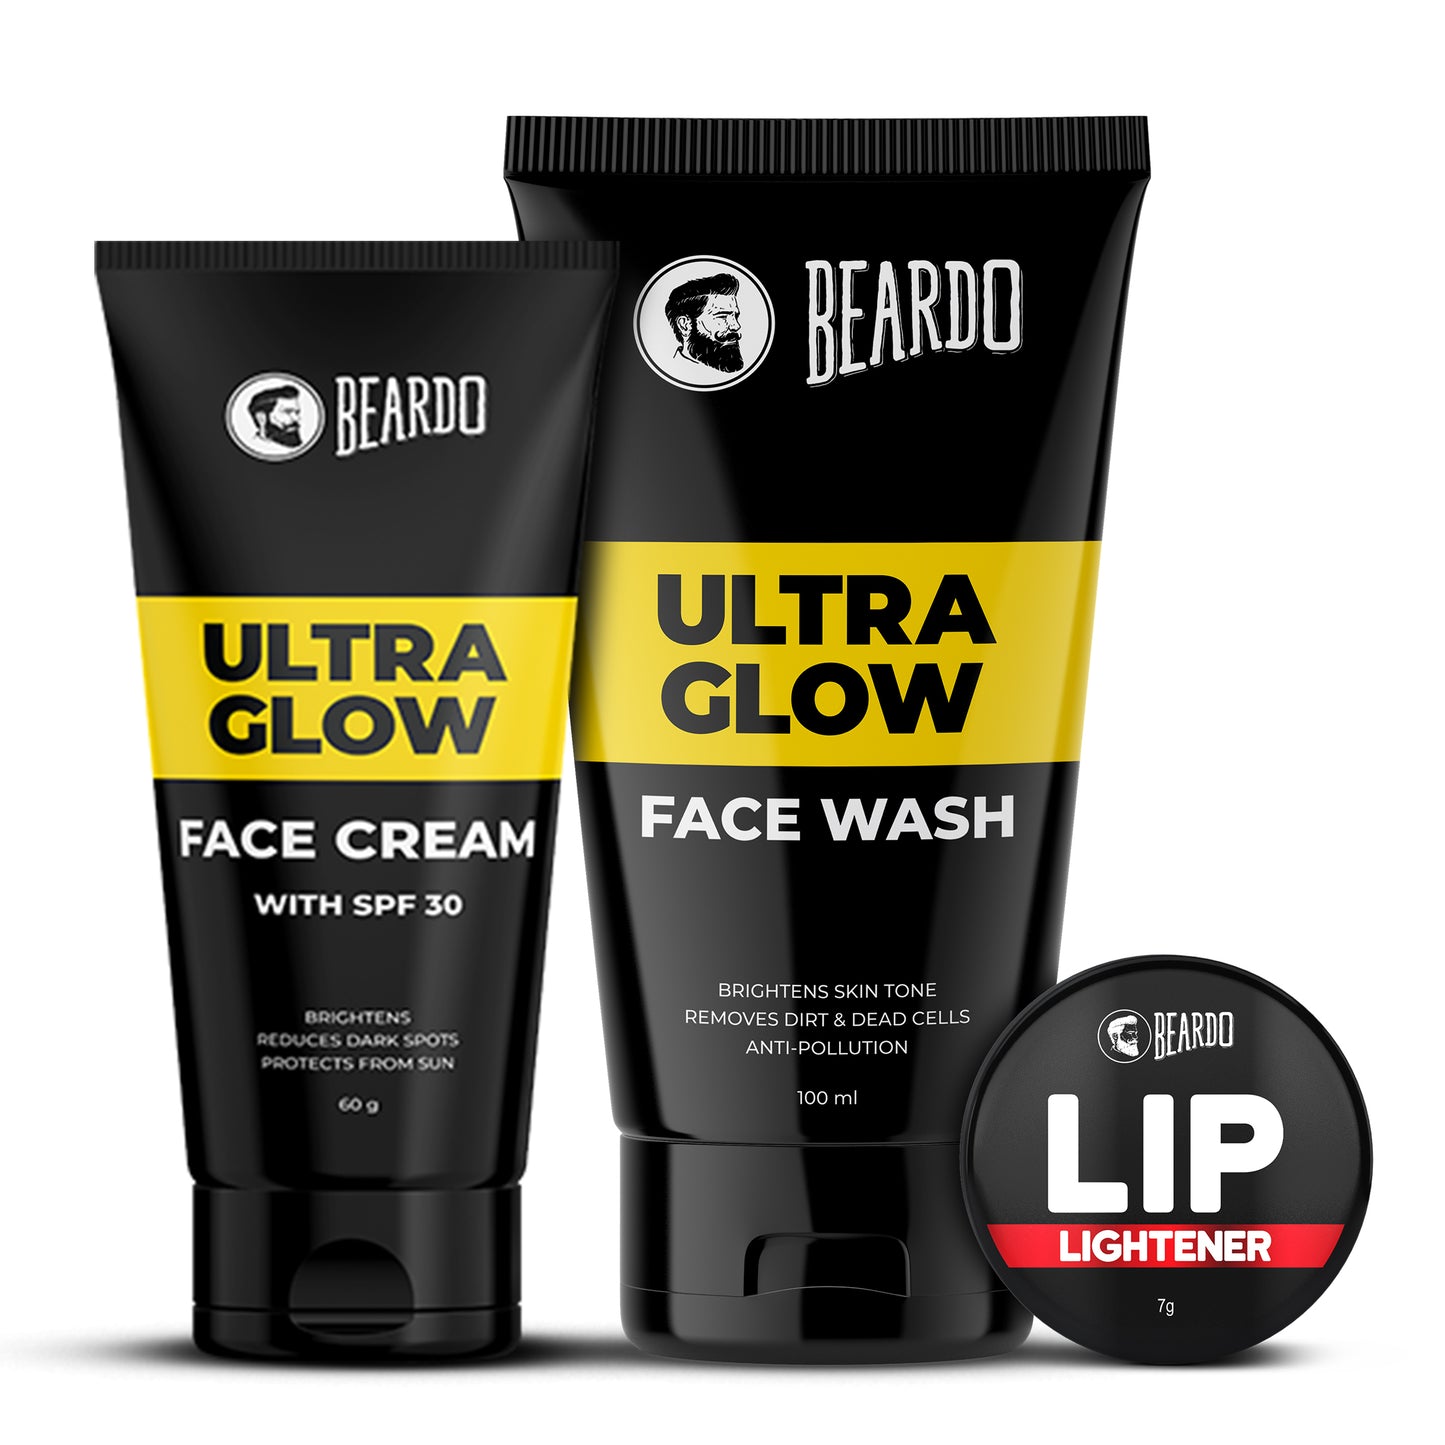 glowing skin men, facial kit combo, face glow tips for men, beardo ultraglow, face glow for men